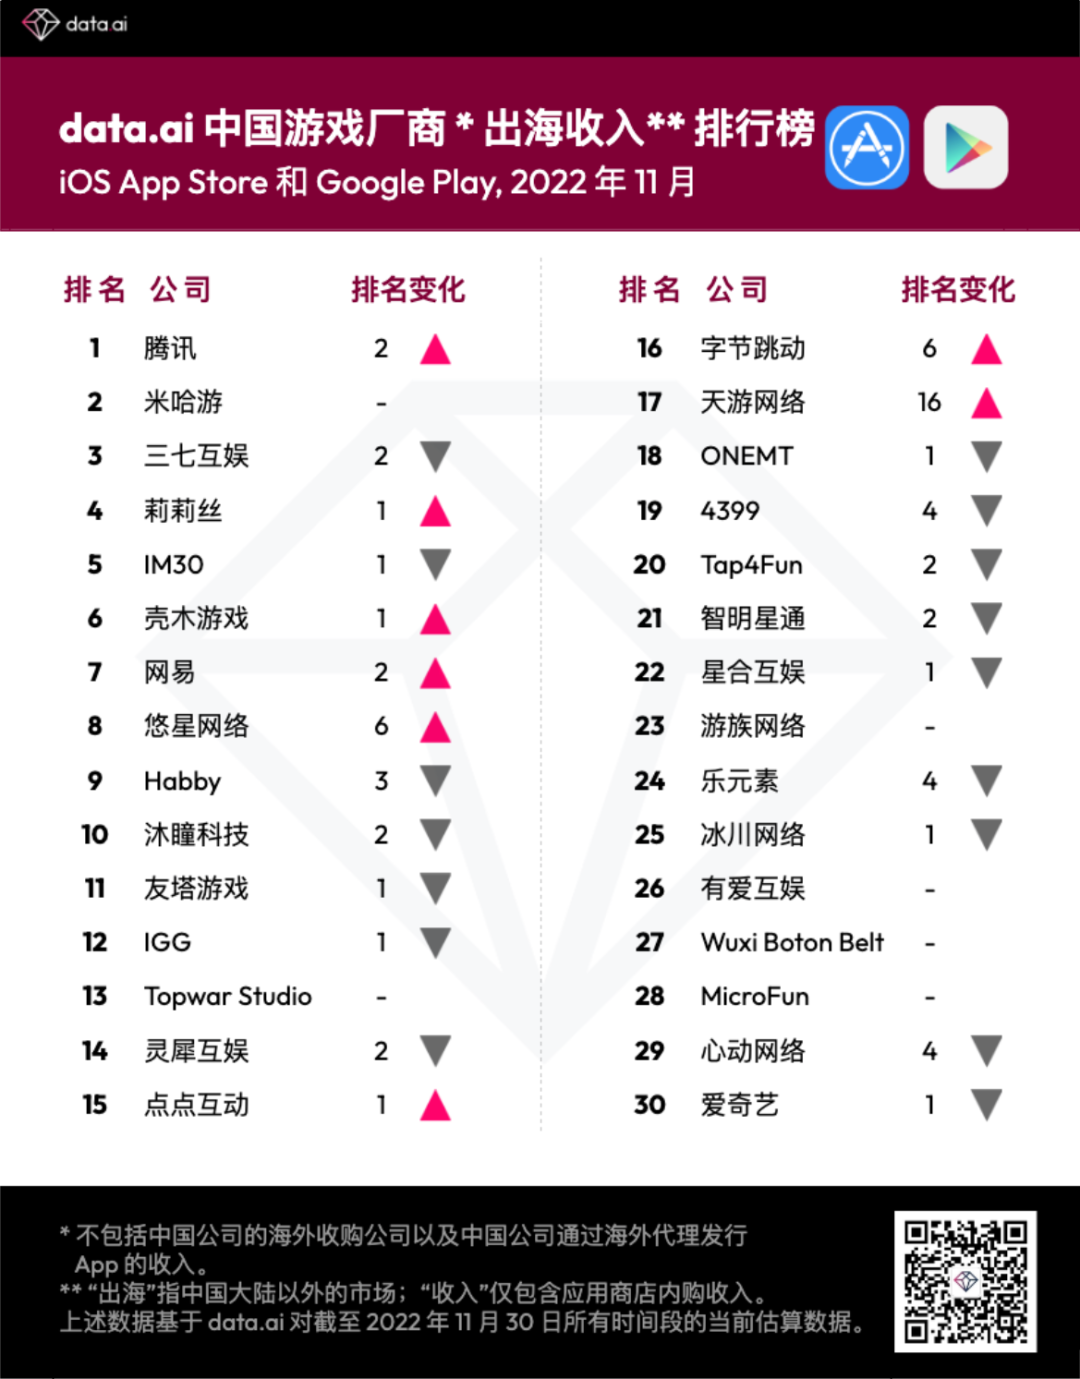 data.ai：腾讯(00700)、米哈游和三七互娱(002555.SZ)为11月中国游戏厂商出海收入排行榜前三